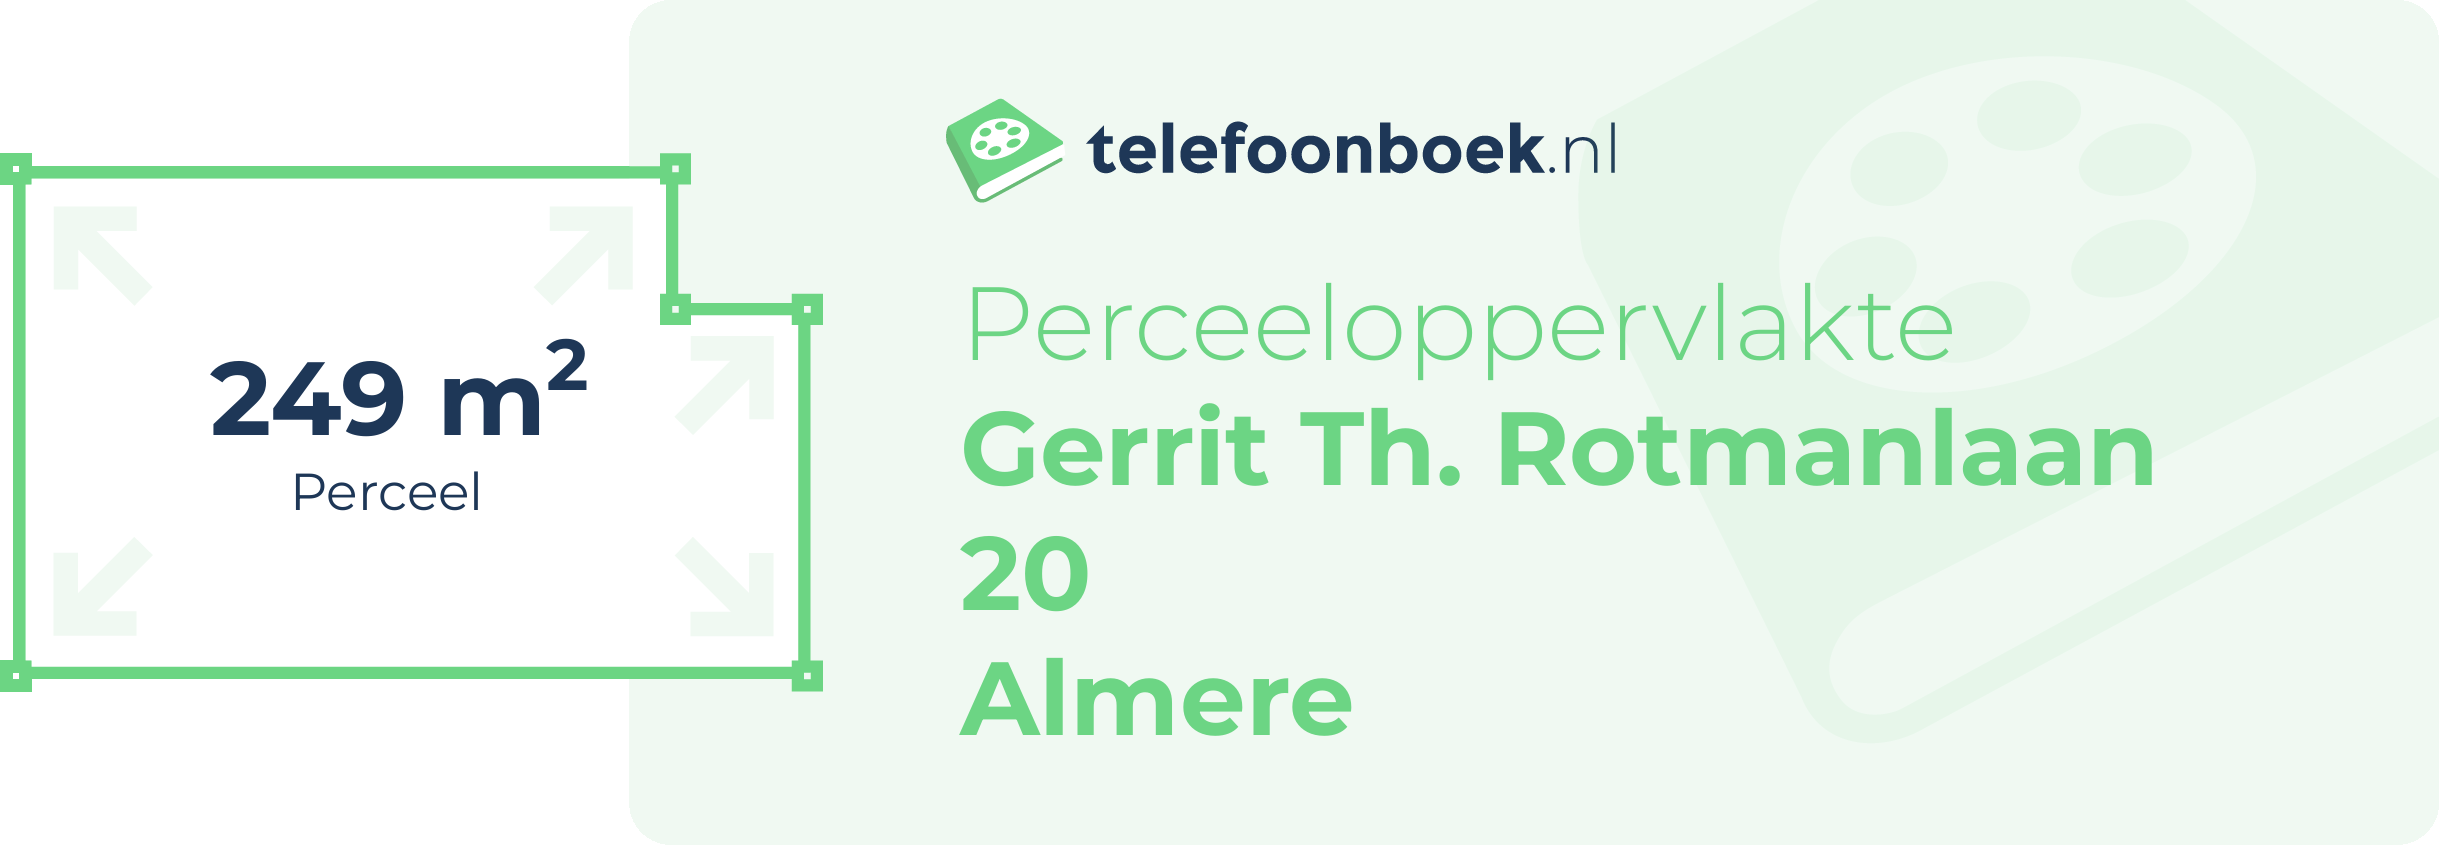 Perceeloppervlakte Gerrit Th. Rotmanlaan 20 Almere